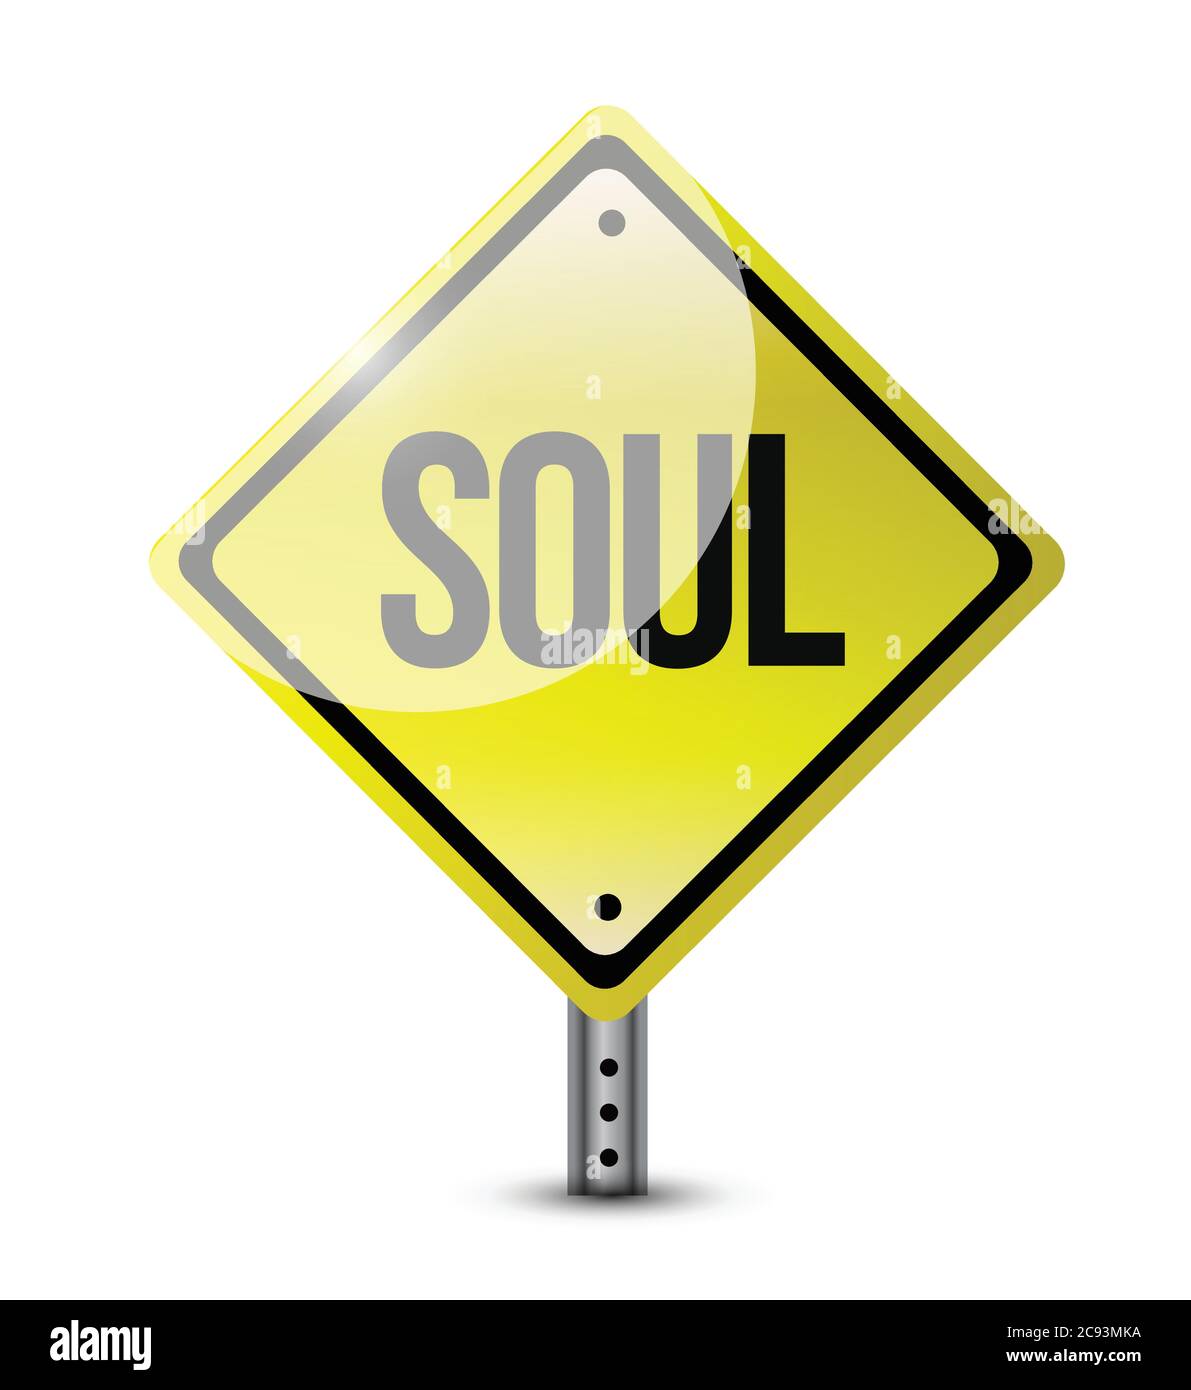 Soul sign illustration design over a white background Stock Vector